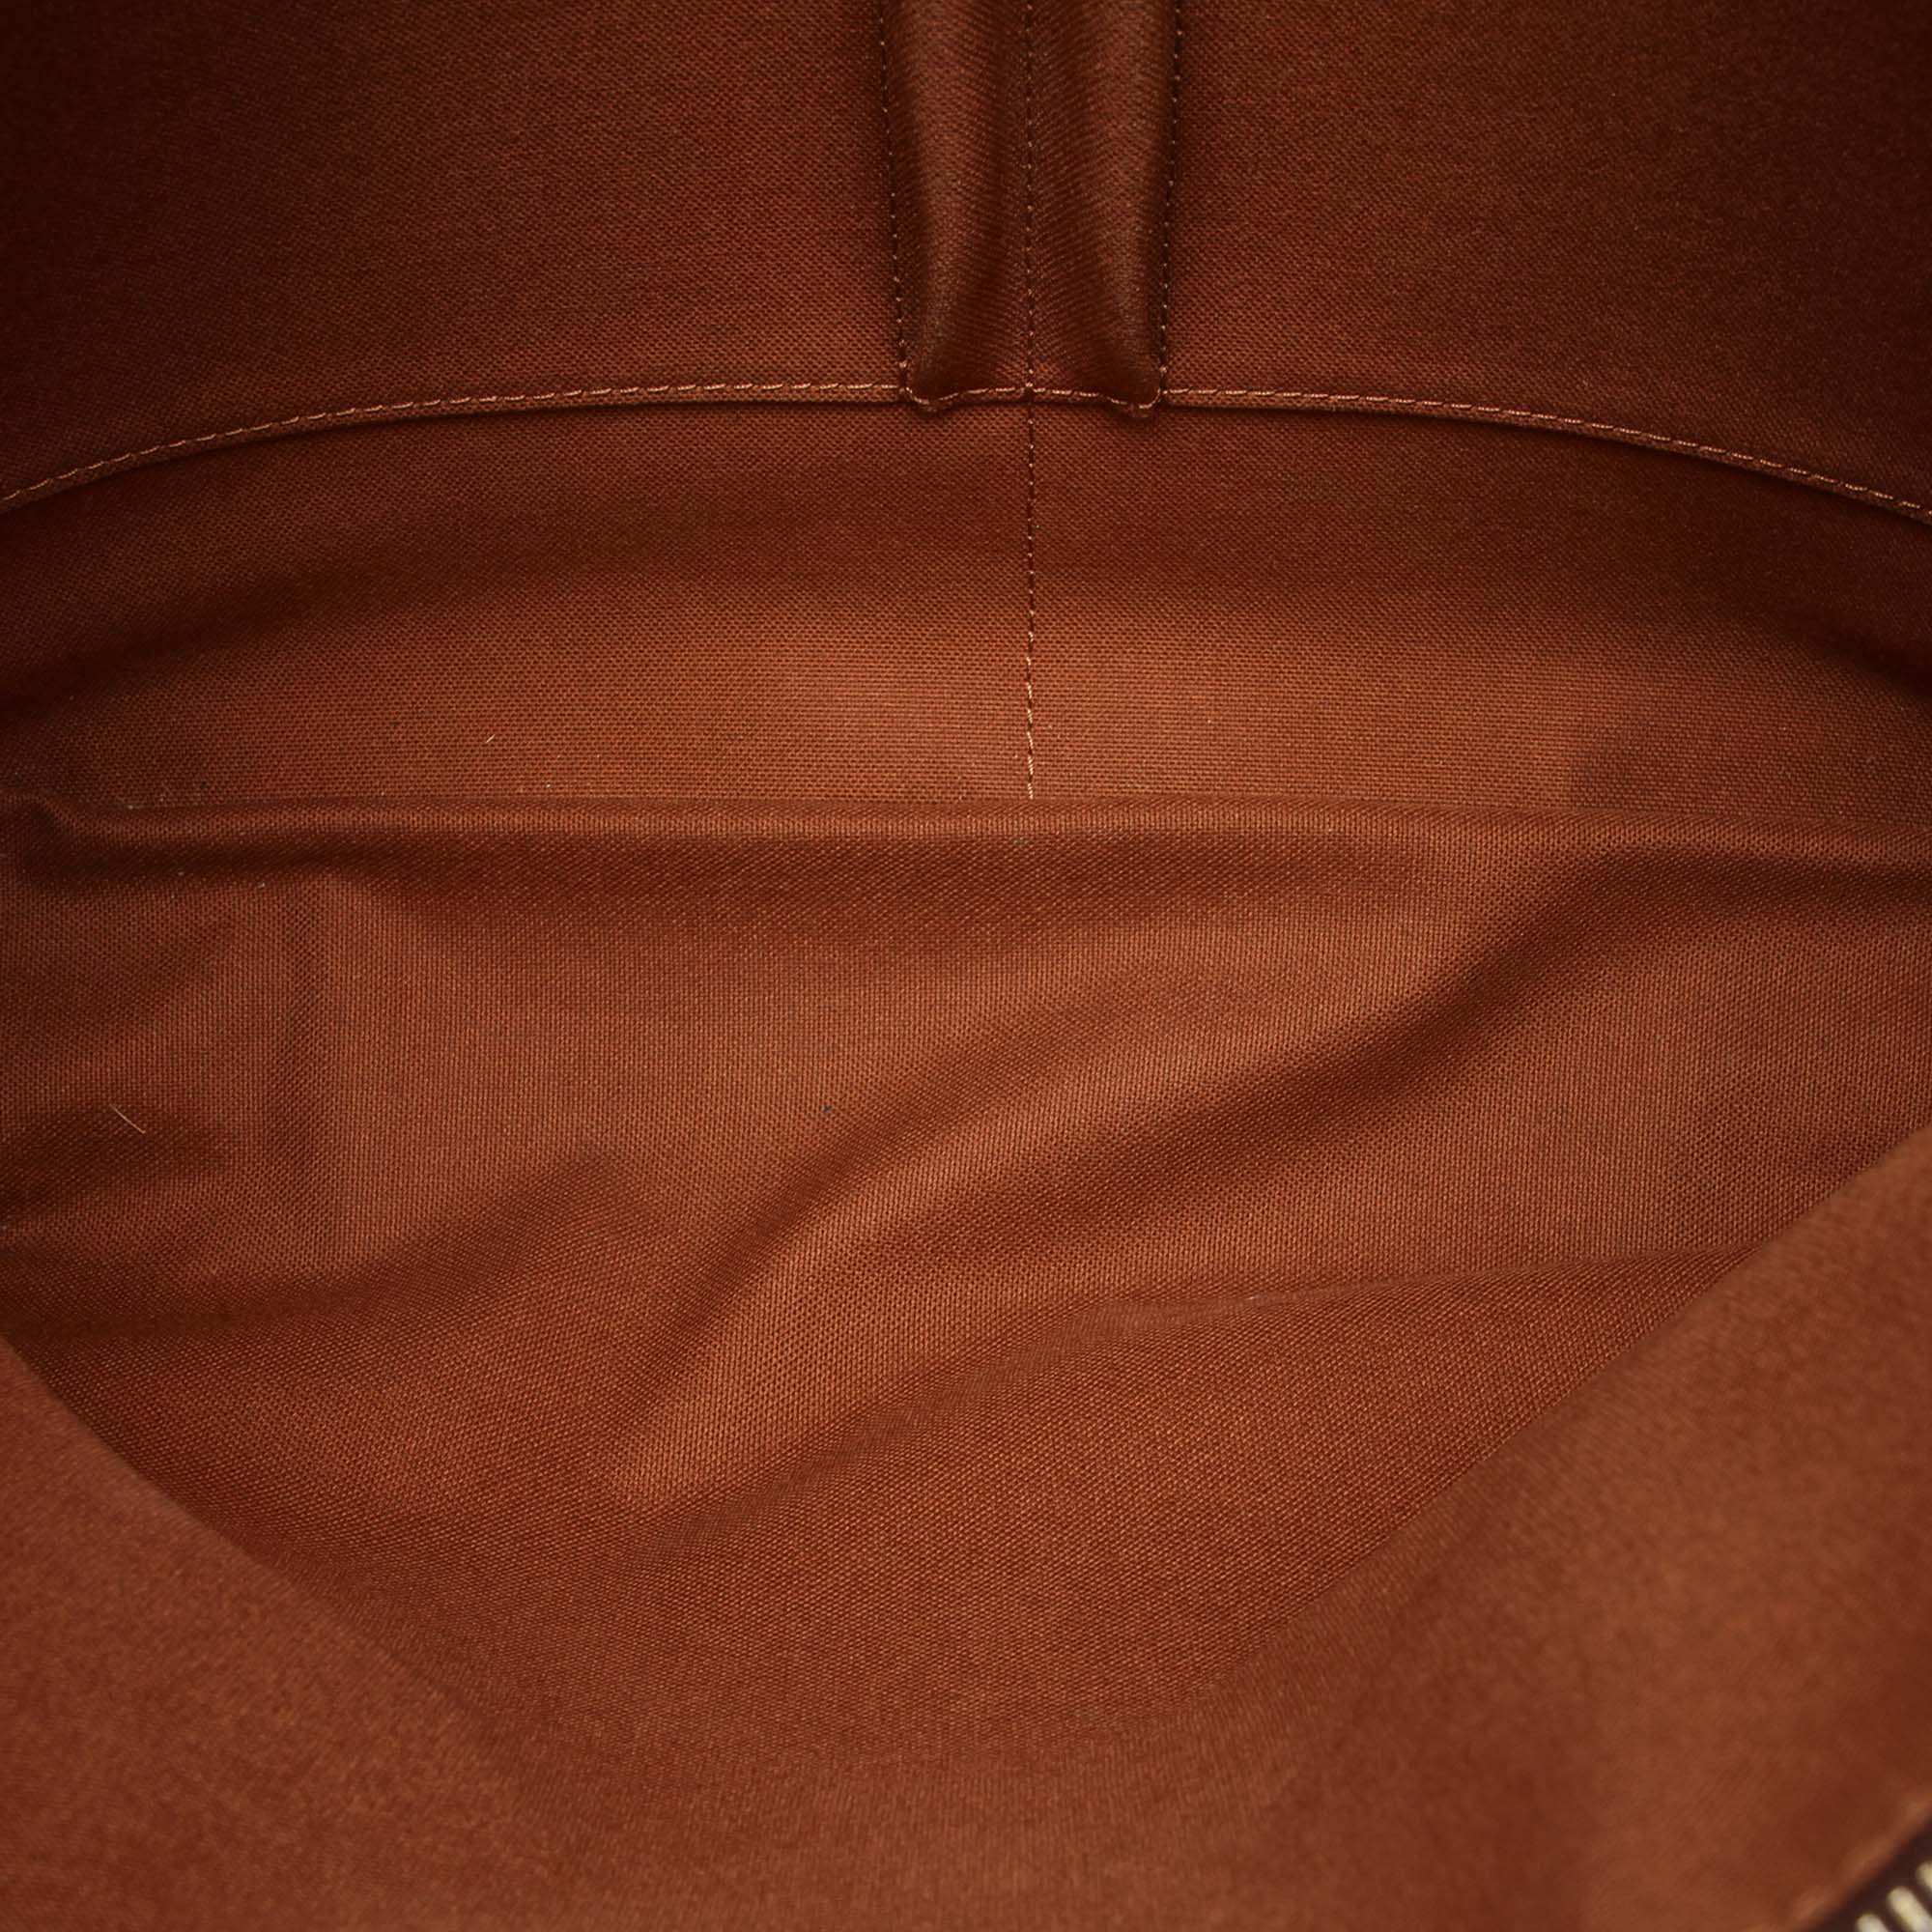 Louis Vuitton 2009 pre-owned Messenger MM Beaubourg shoulder bag